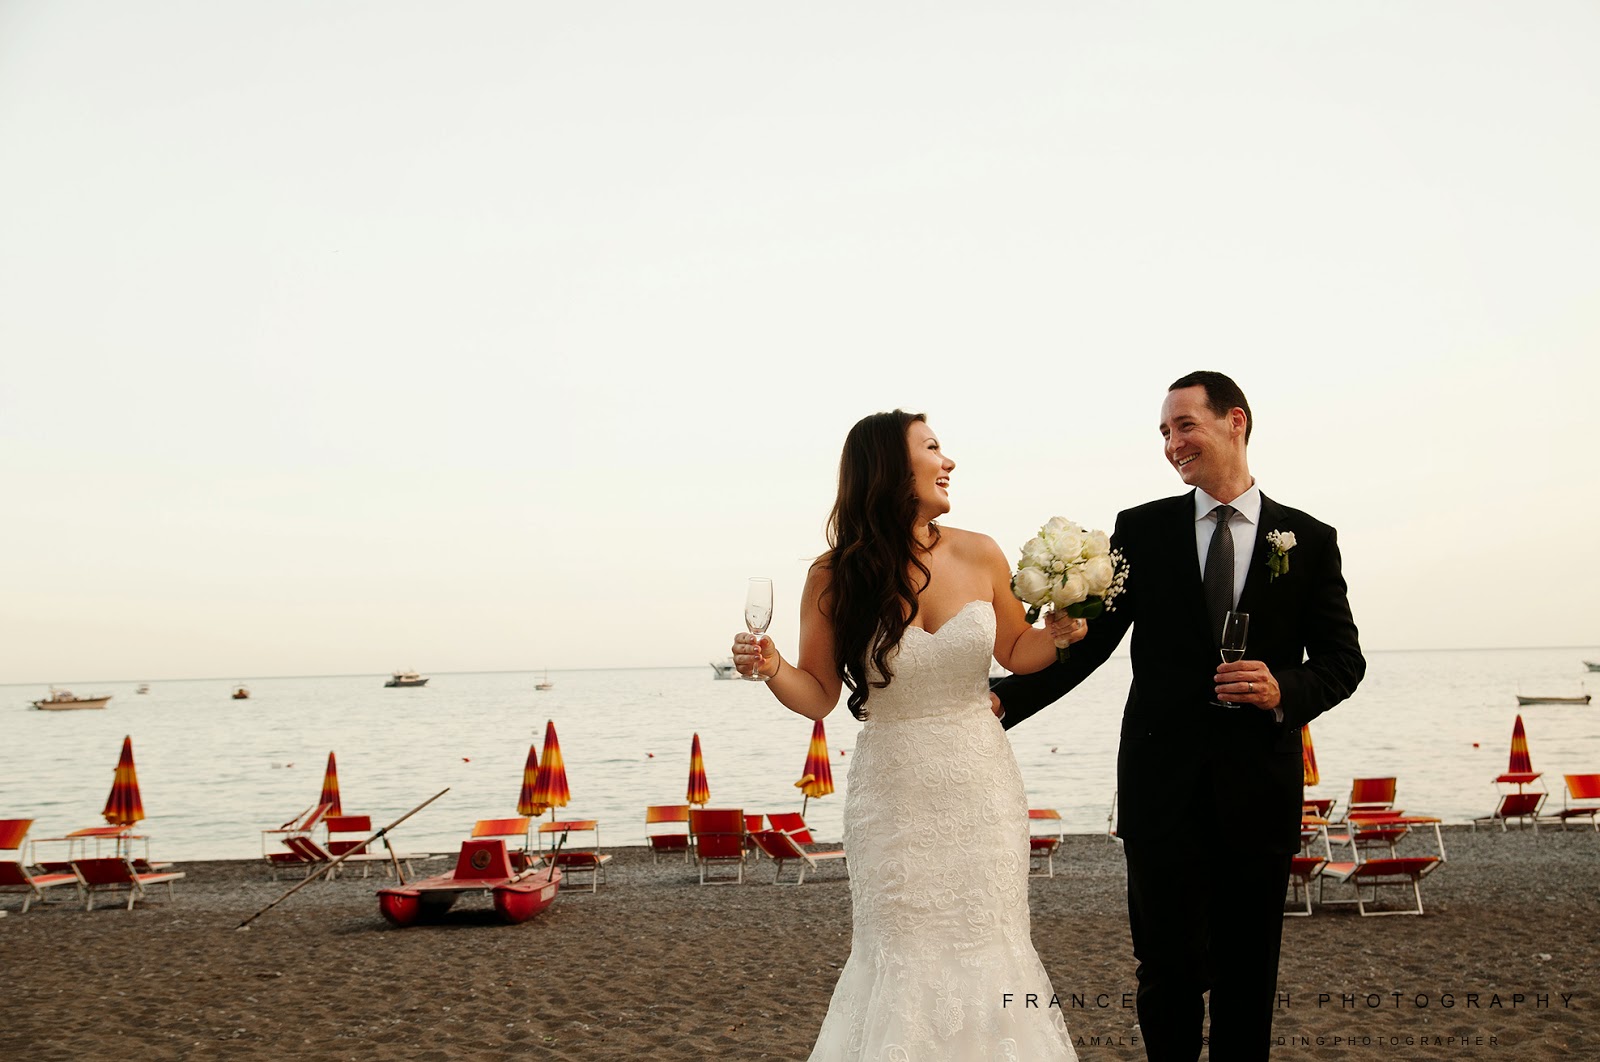 Bride and groom on Positano beach